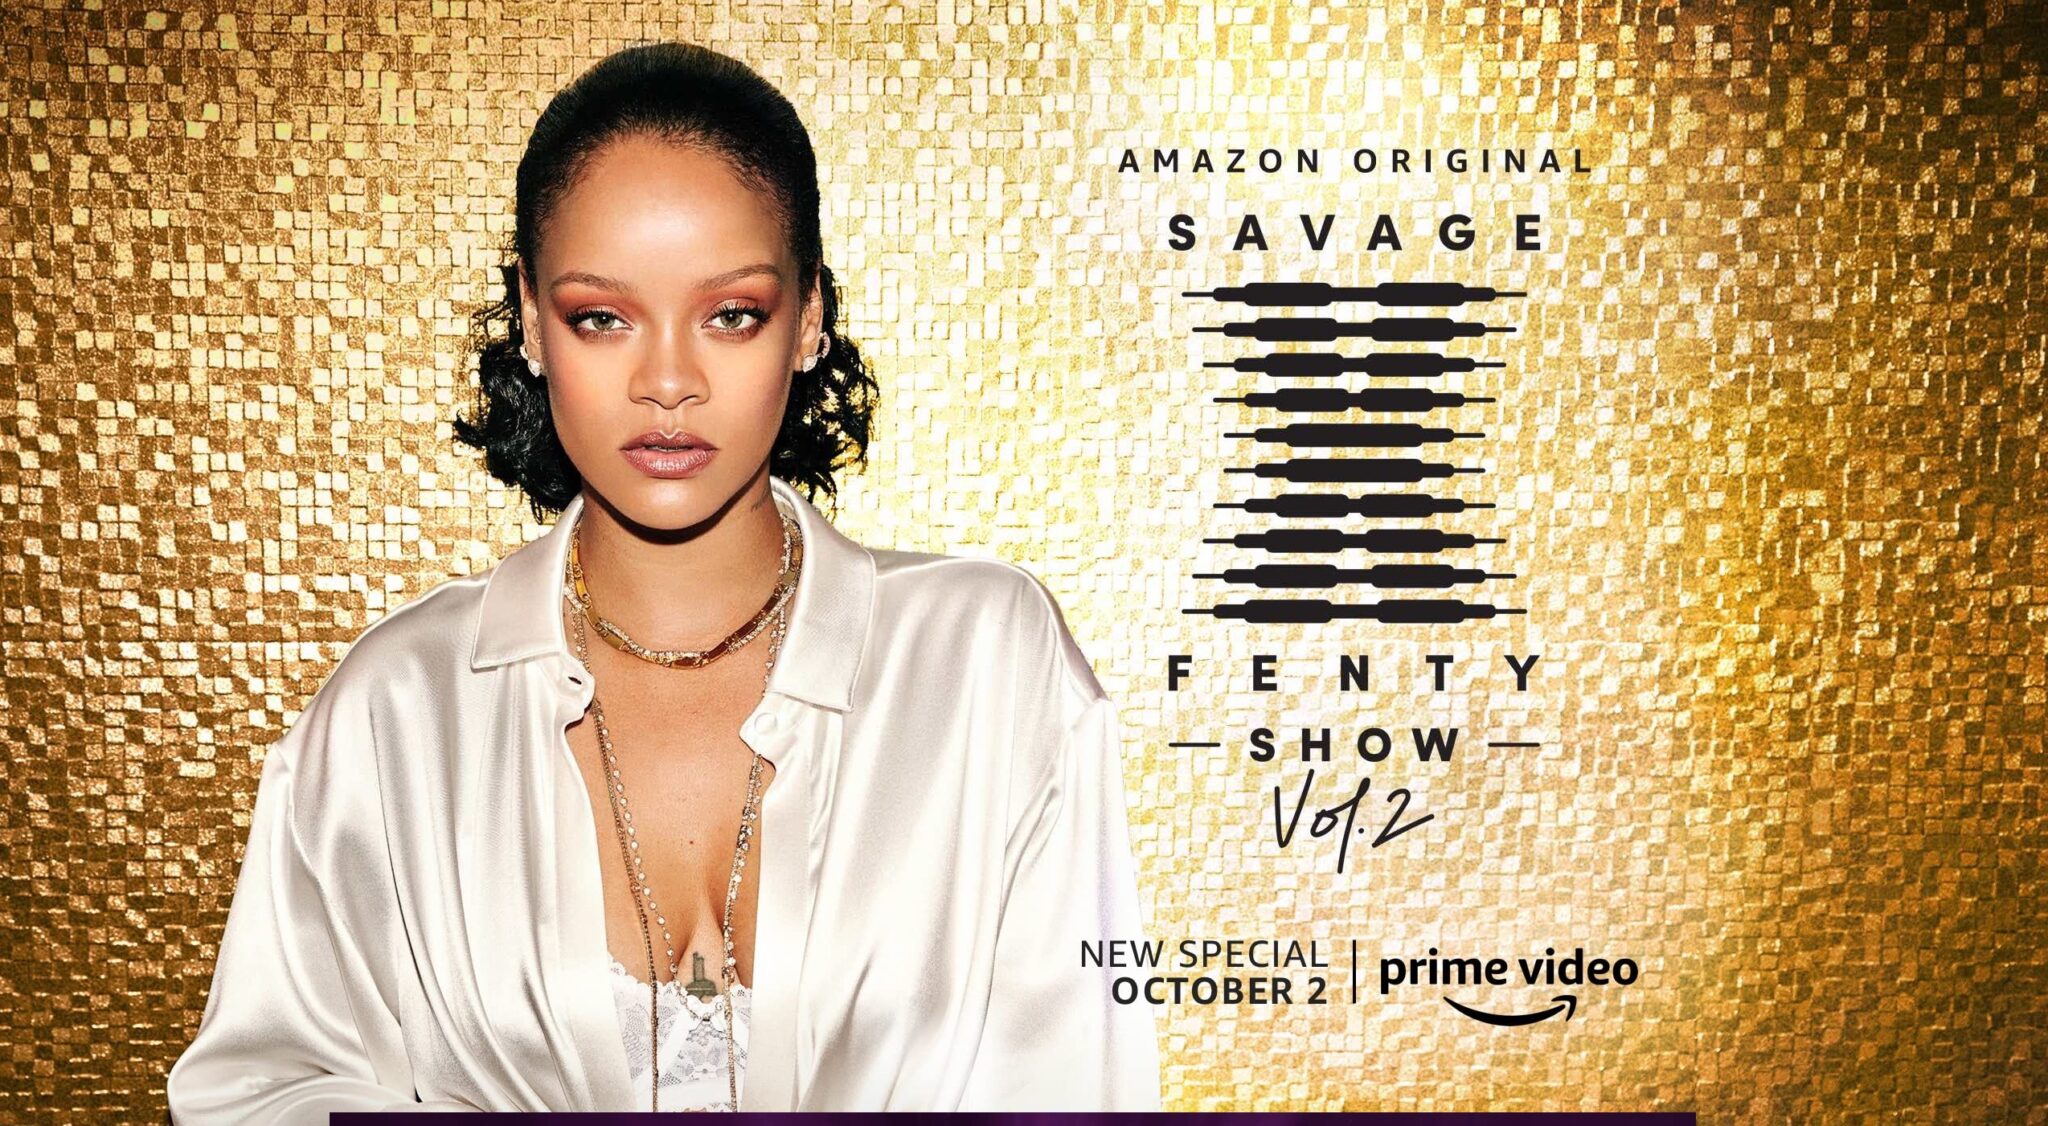 The Savage X Fenty Fashion Show will premiere on Amazon Prime on